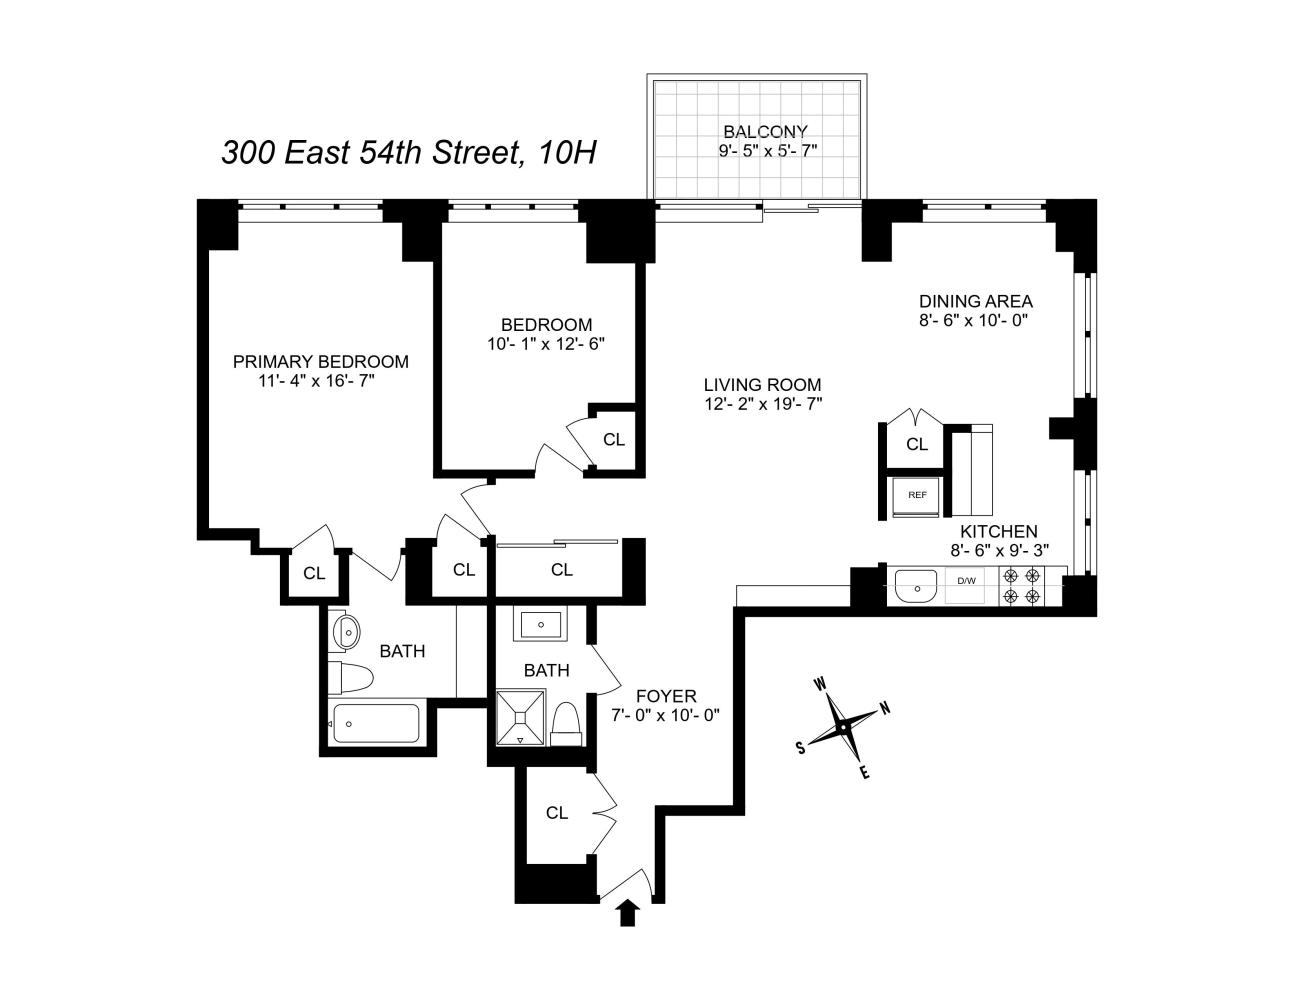 Floorplan for 300 East 54th Street, 10H